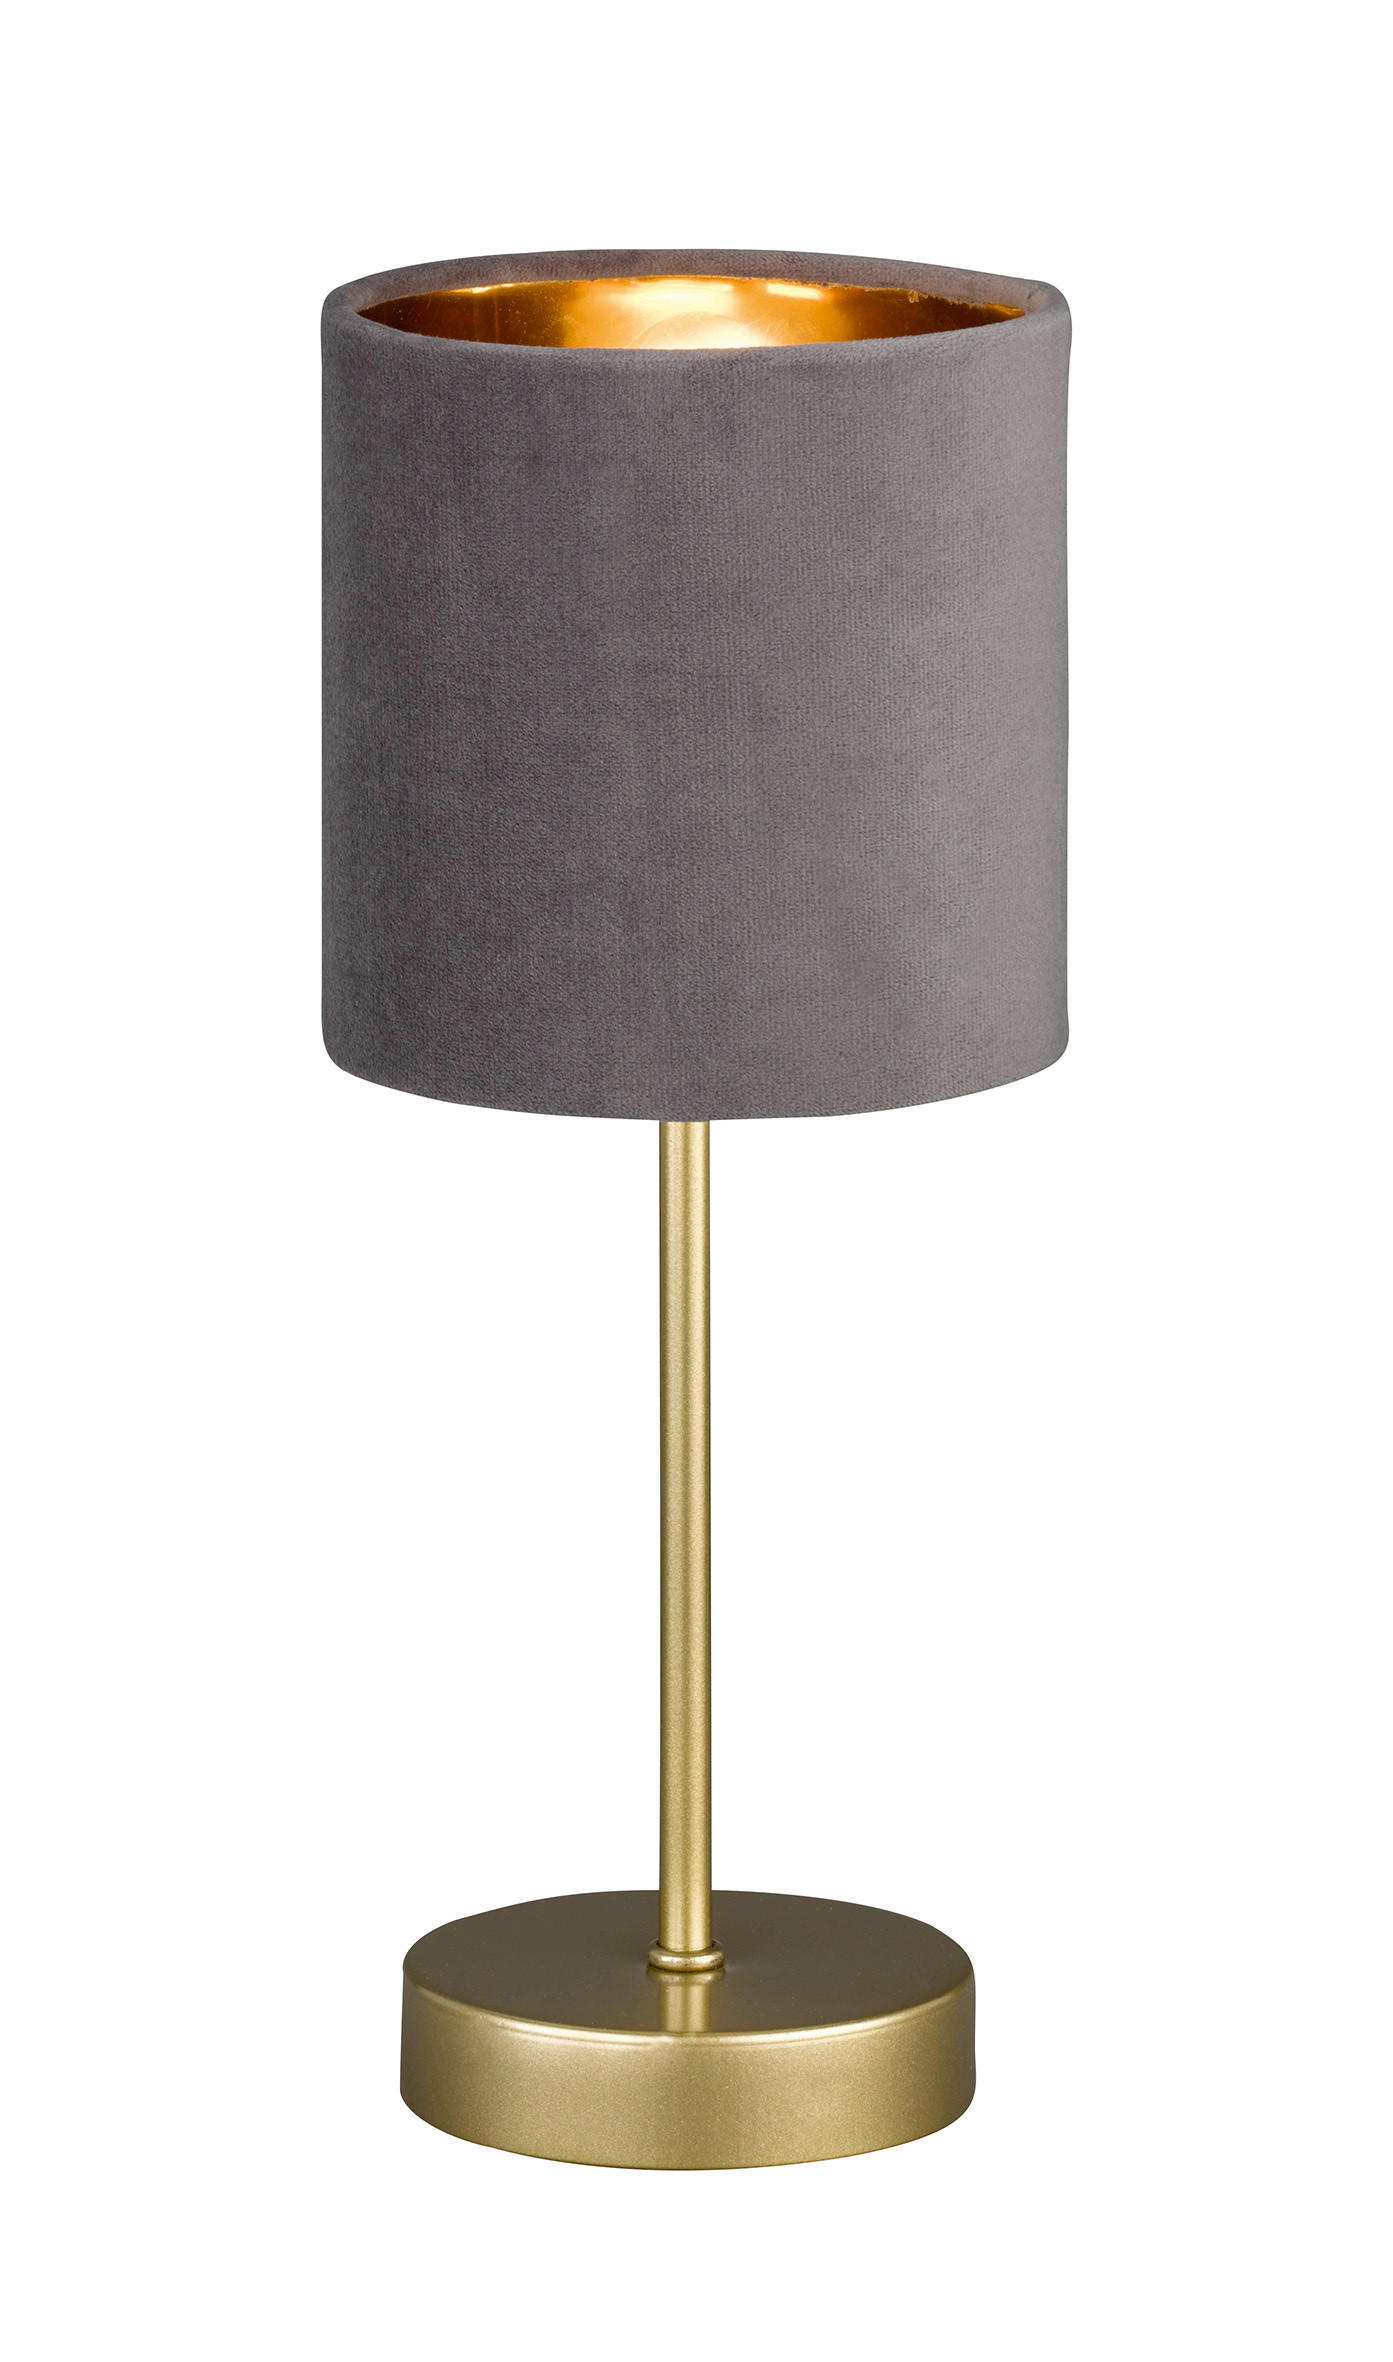 BORDSLAMPA 13/34 cm   - grå/guldfärgad, Design, metall/textil (13/34cm) - Best Price